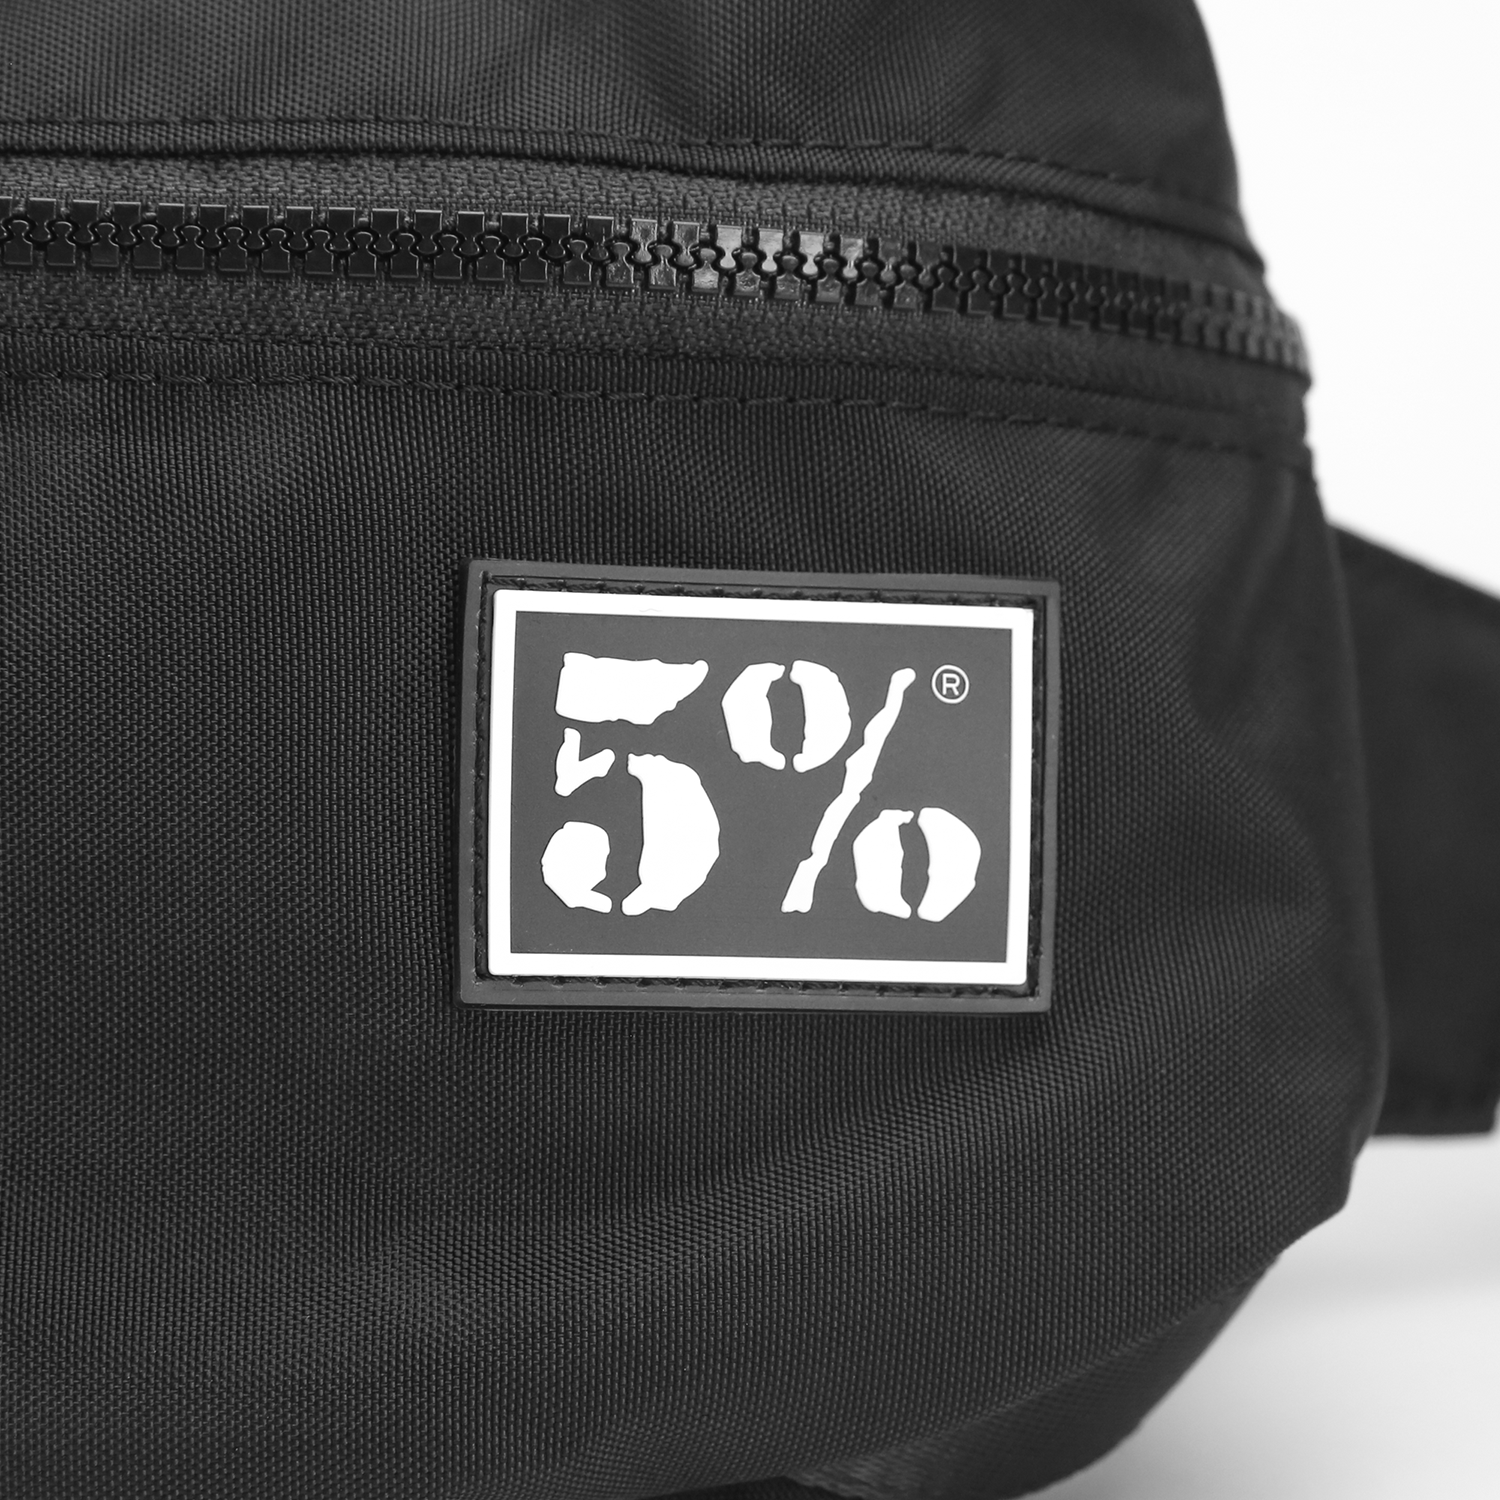 5% Crossbody Bag - 5% Nutrition